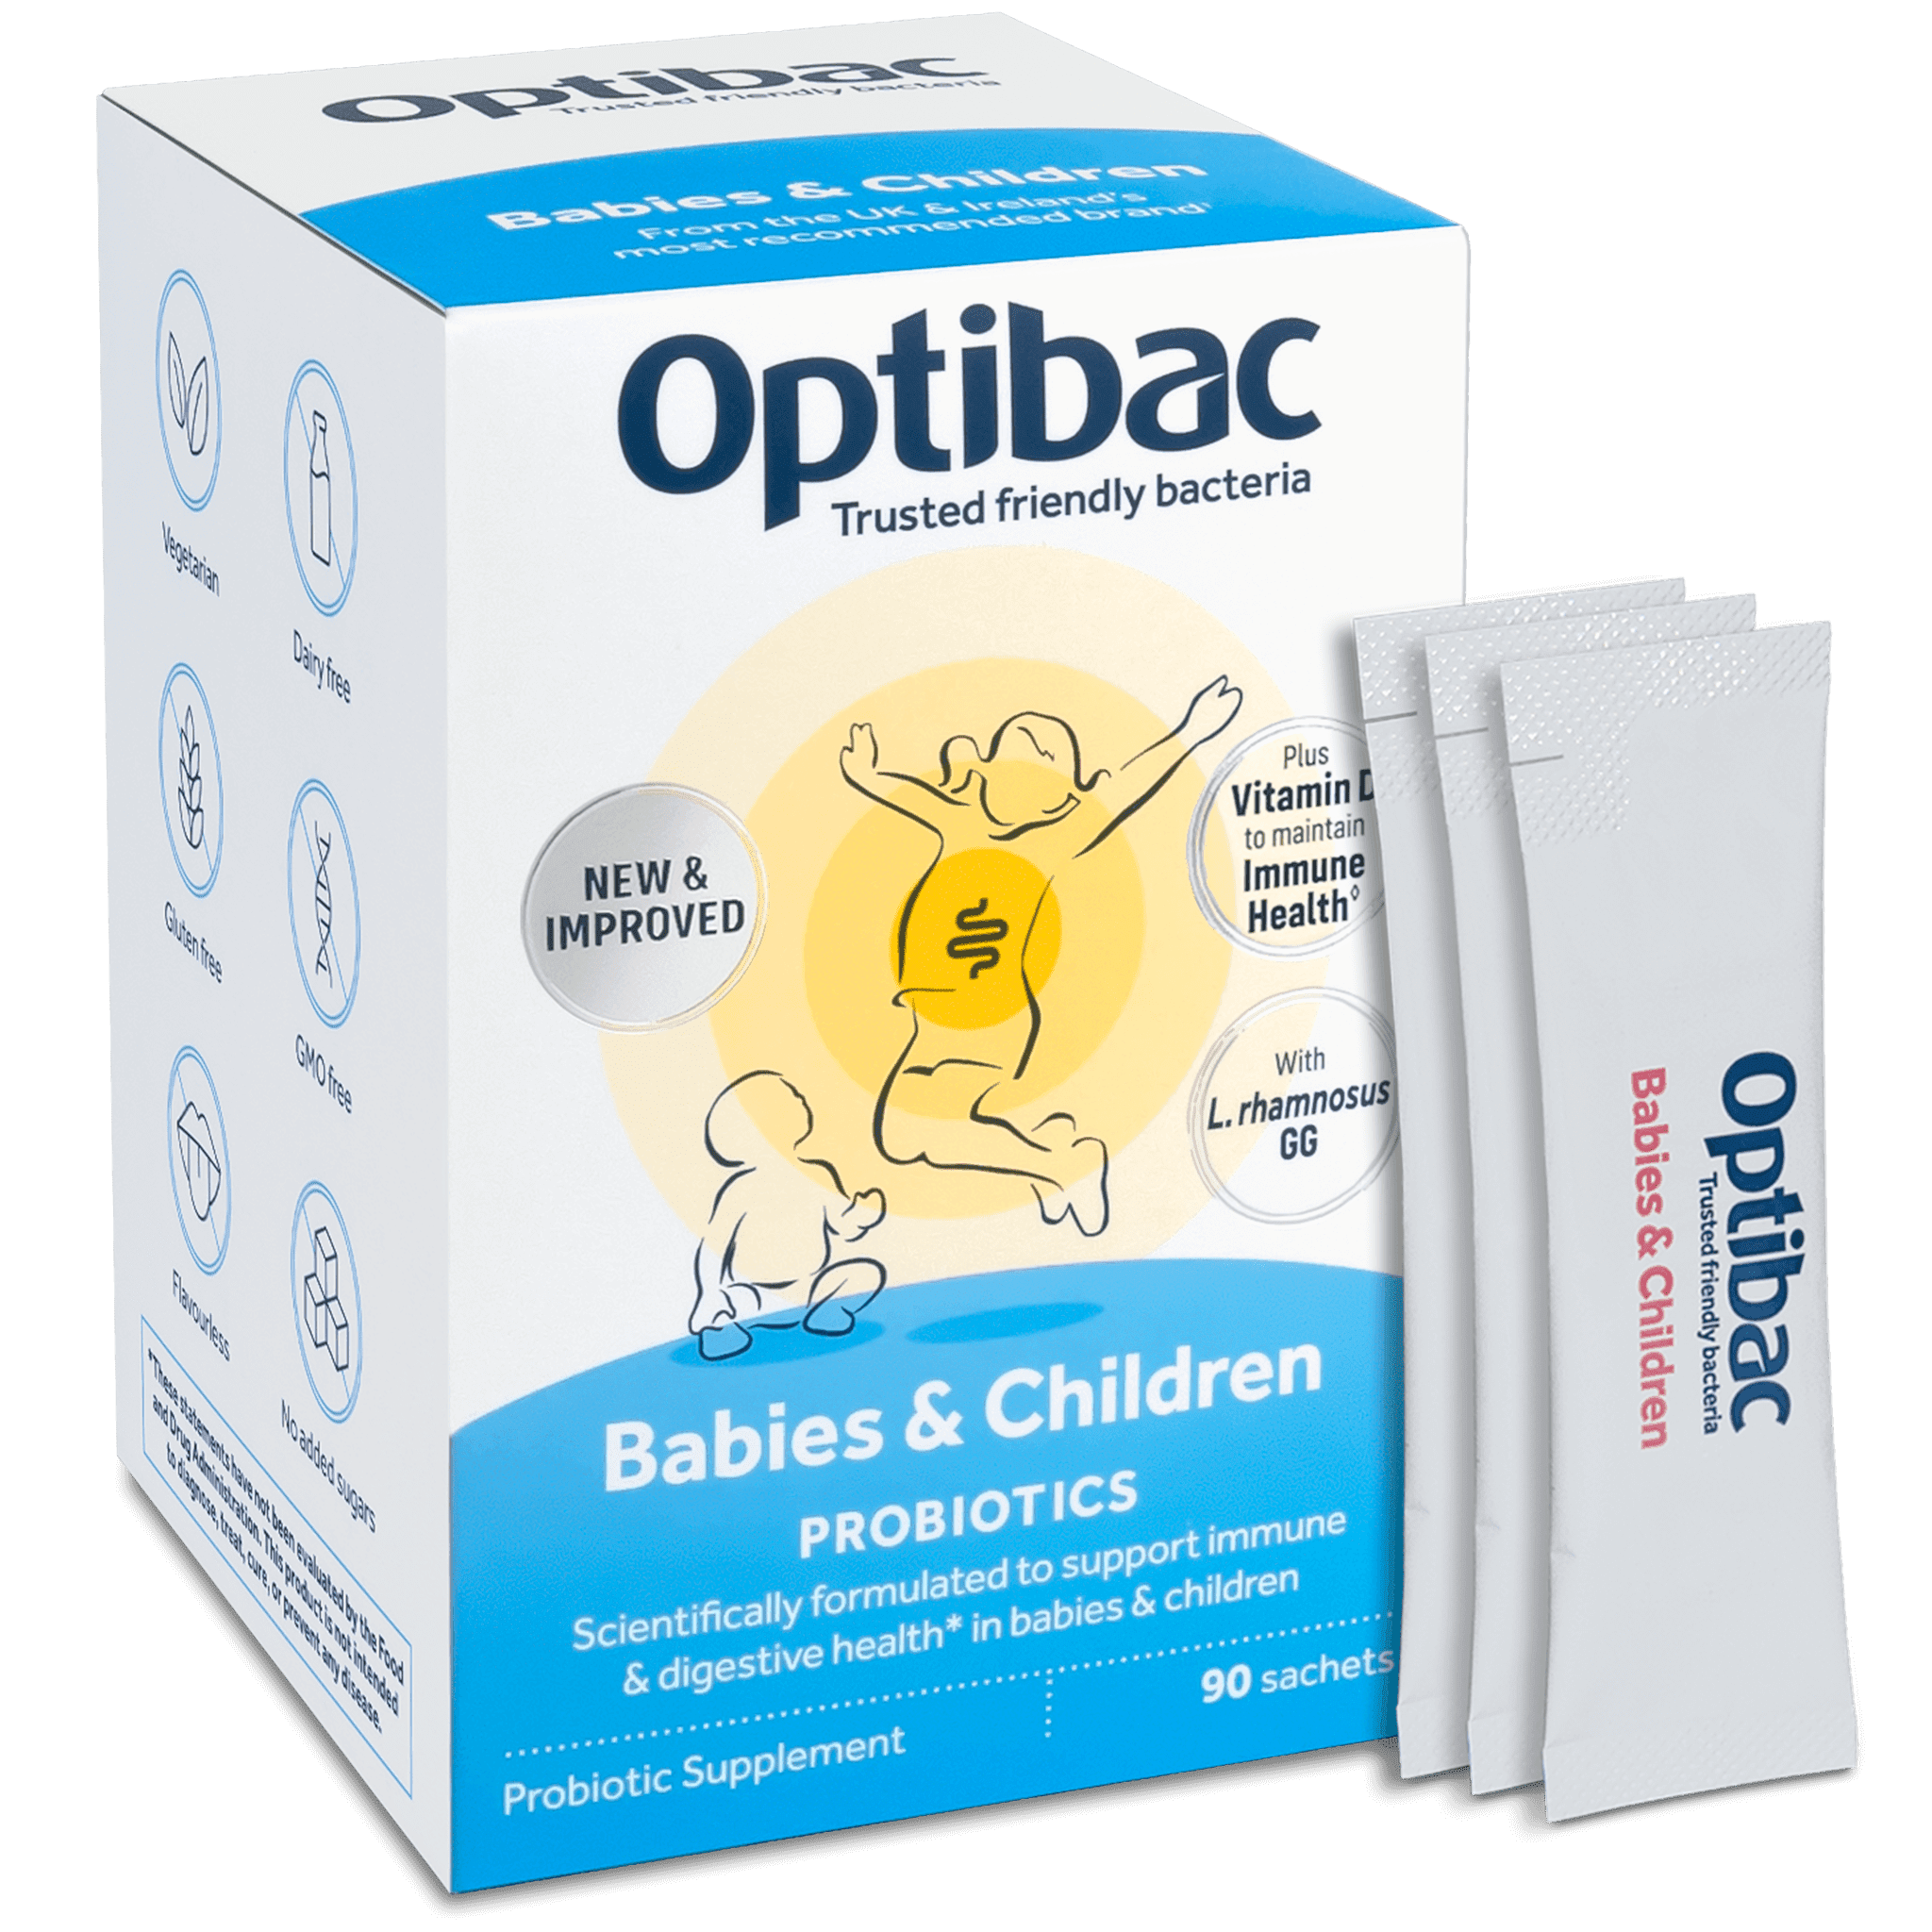 Optibac Probiotics Babies & Children (90 sachets) pack contents